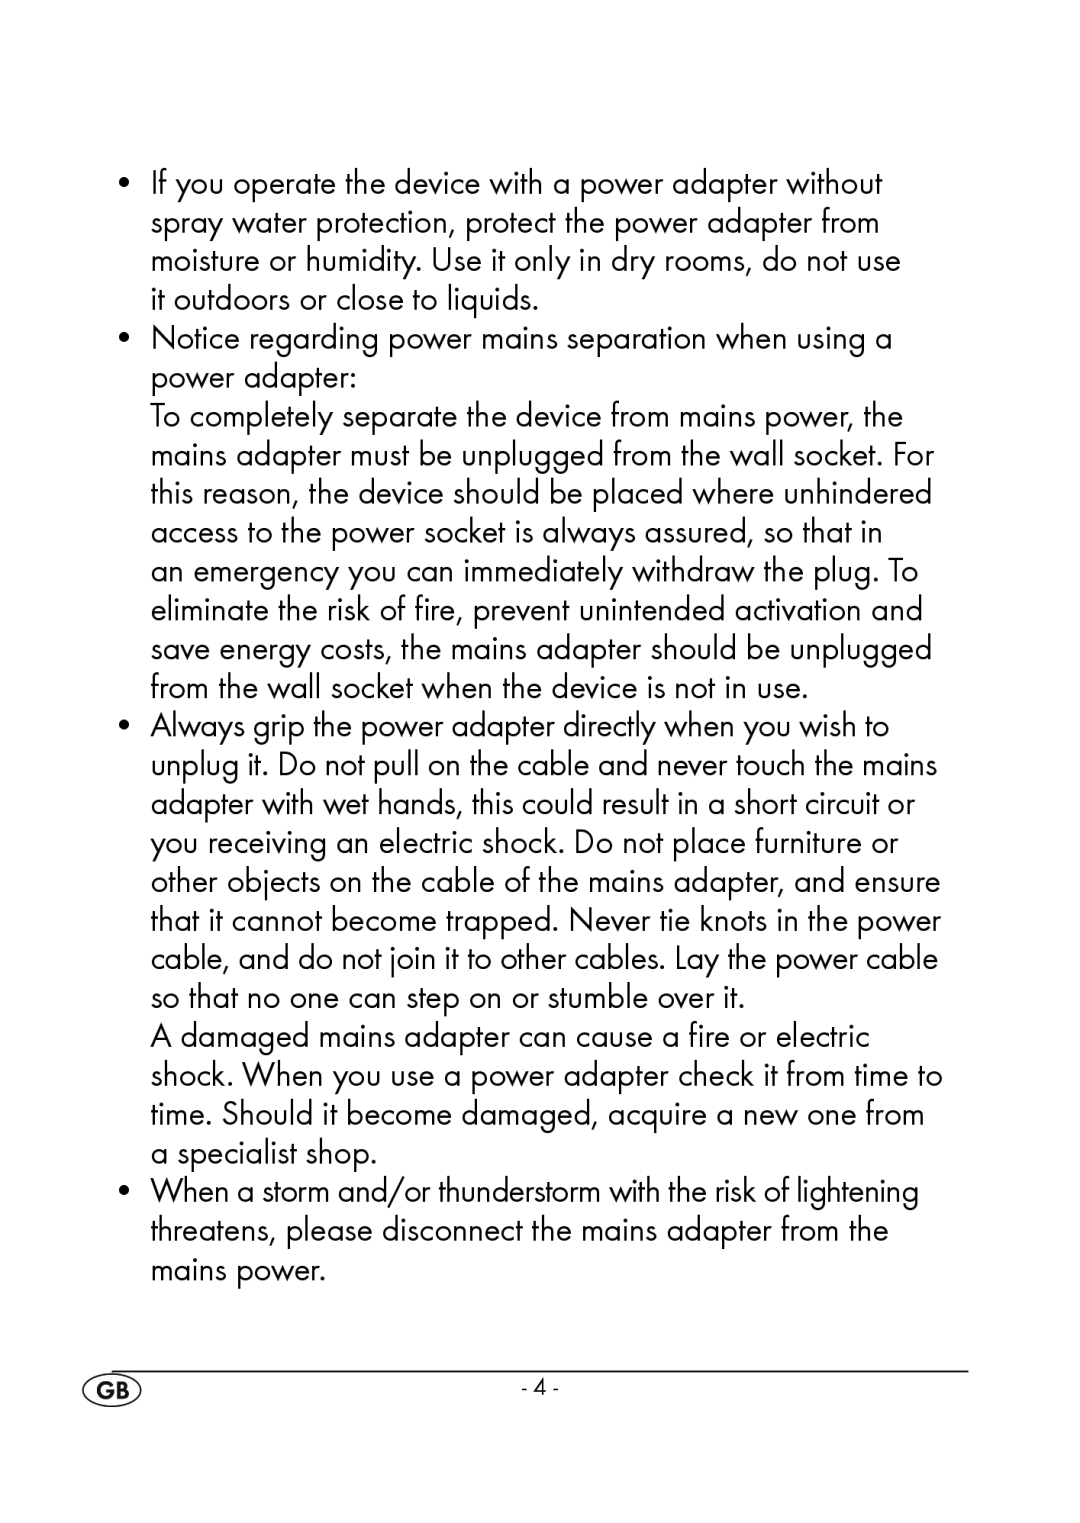 Silvercrest KH 245 manual Notice regarding power mains separation when using a power adapter 